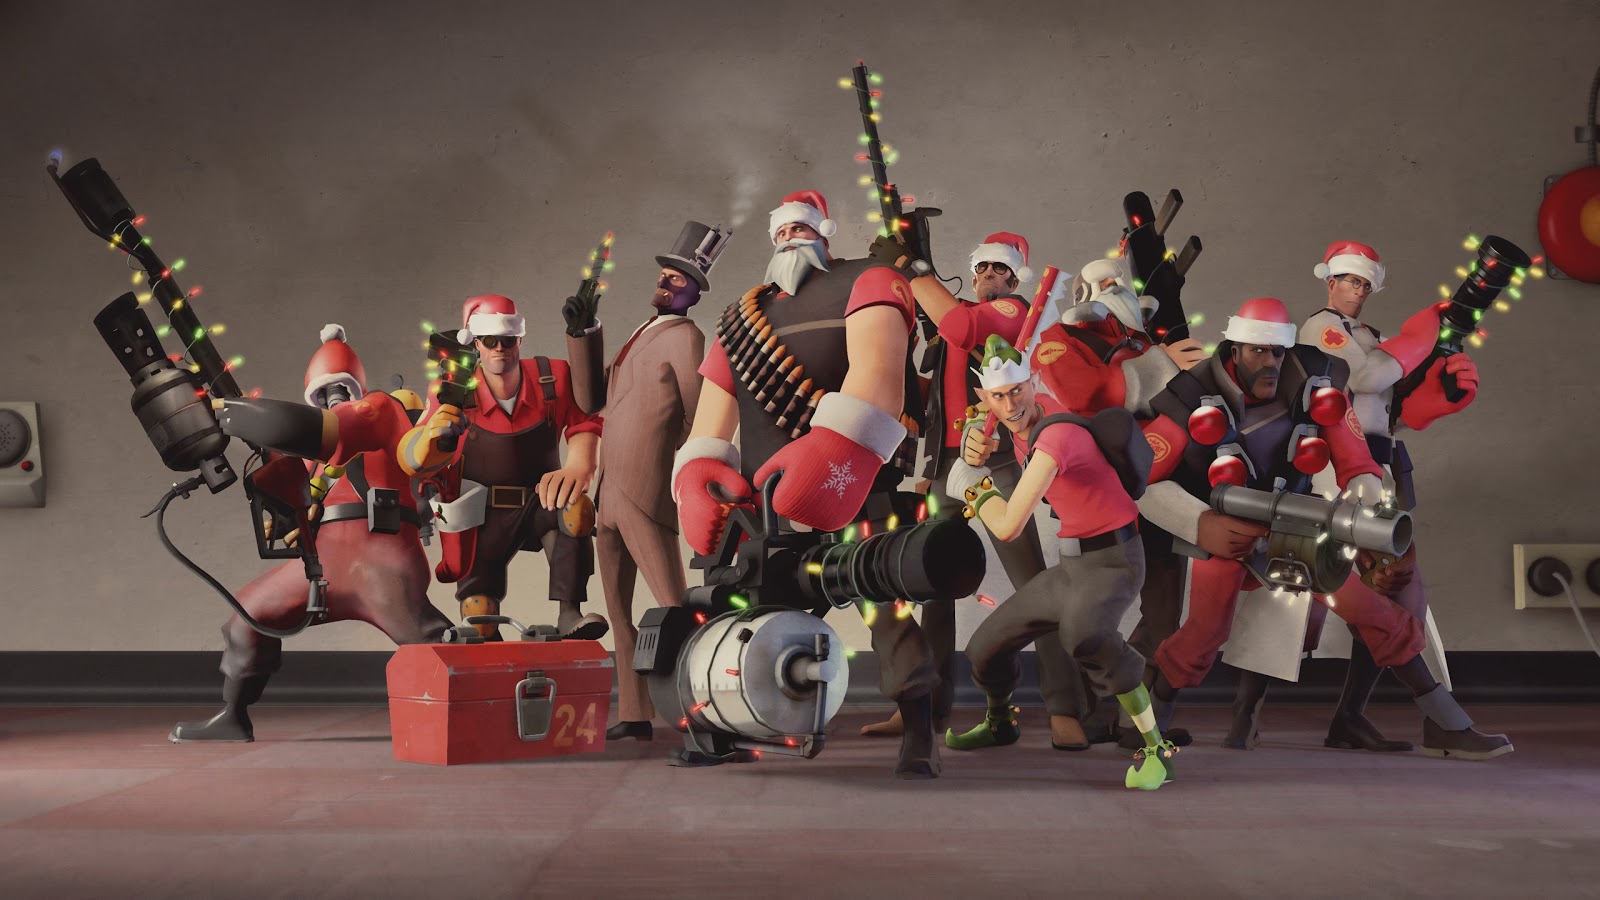 https://blogger.googleusercontent.com/img/b/R29vZ2xl/AVvXsEgZLZPf8tIQl6V6Cxzv_7YKNzVfllen4mUS-QQOxLUH5fnnzdEEpr2Fg6VBAQYJJq7P2zvwHwa7pkKnC31JeTtuHsssbpedGulDfWeKKfgVvagHjjtdJq7GRIzzGKgL0sCc8ZmckohmkrI/s1600/Team-Fortress-2-Characters-Christmas-Wallpaper.jpg